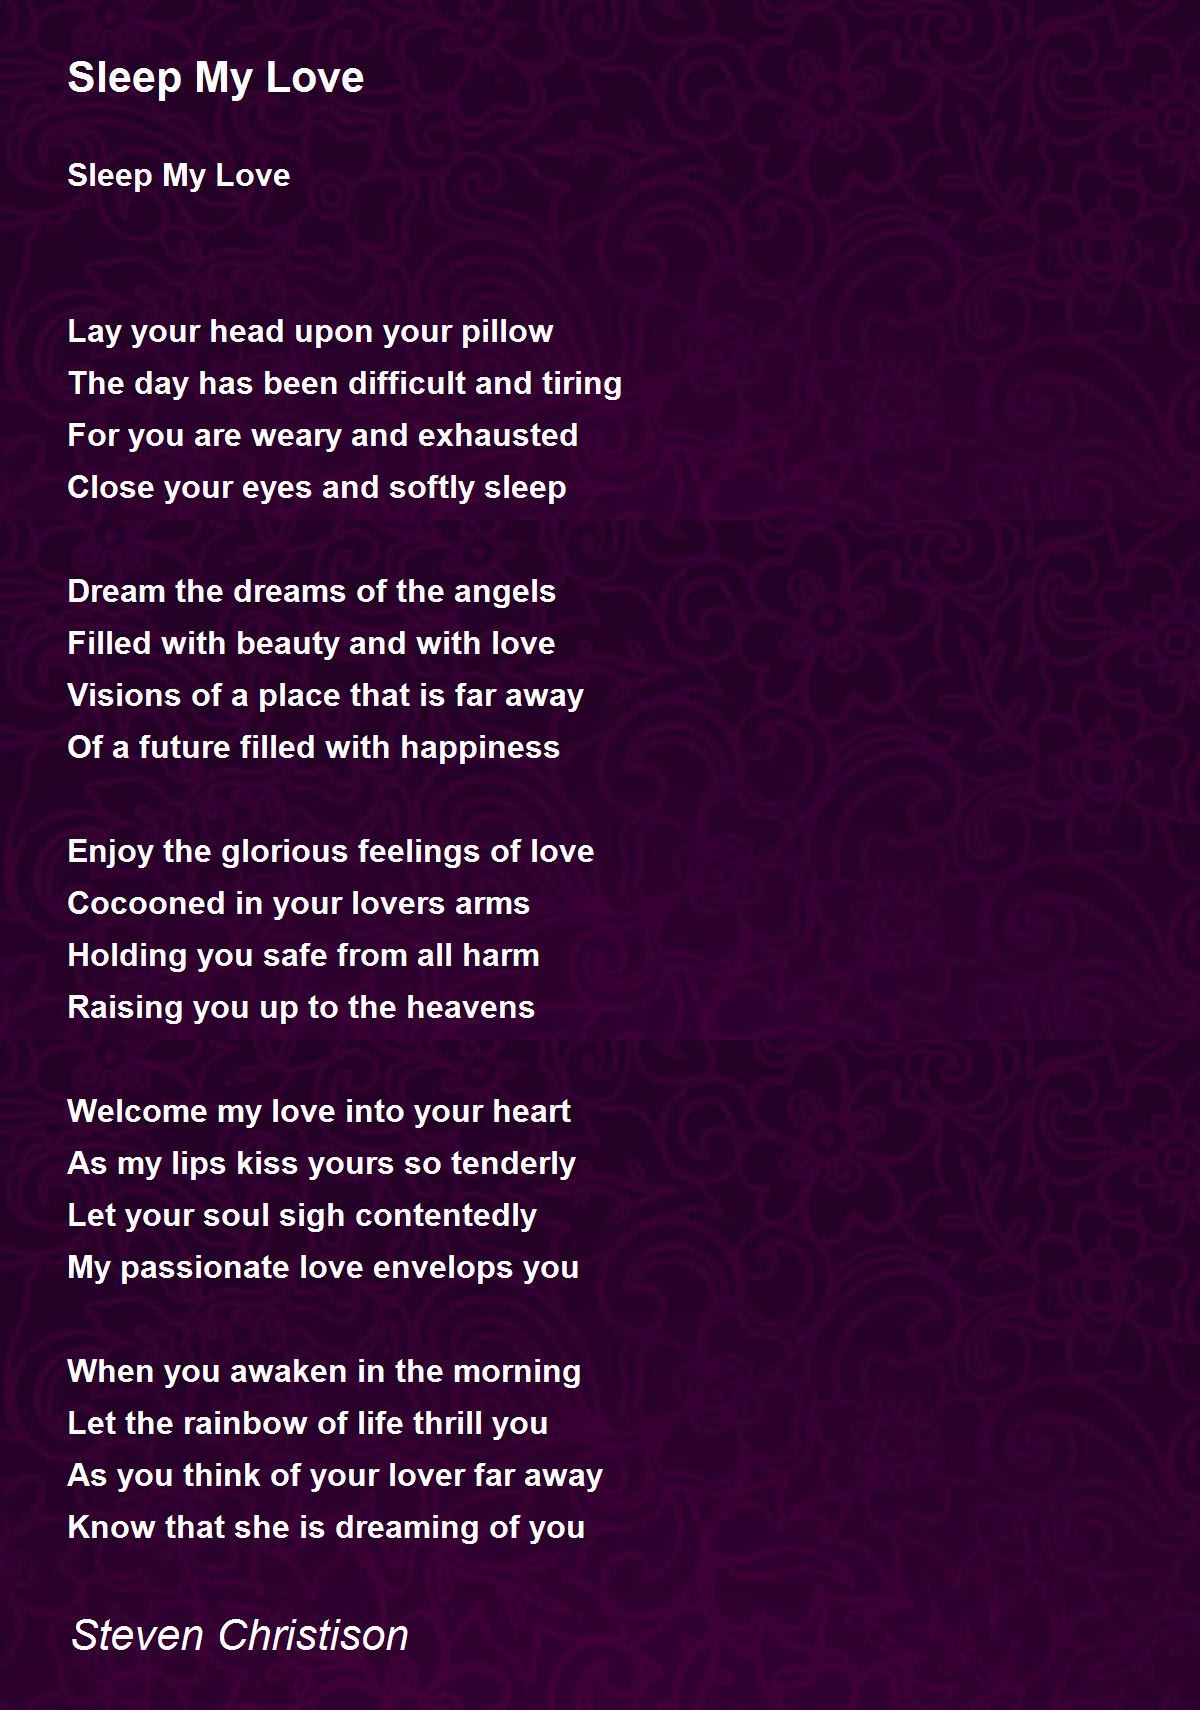 Sleep My Love - Sleep My Love Poem by Steven Christison